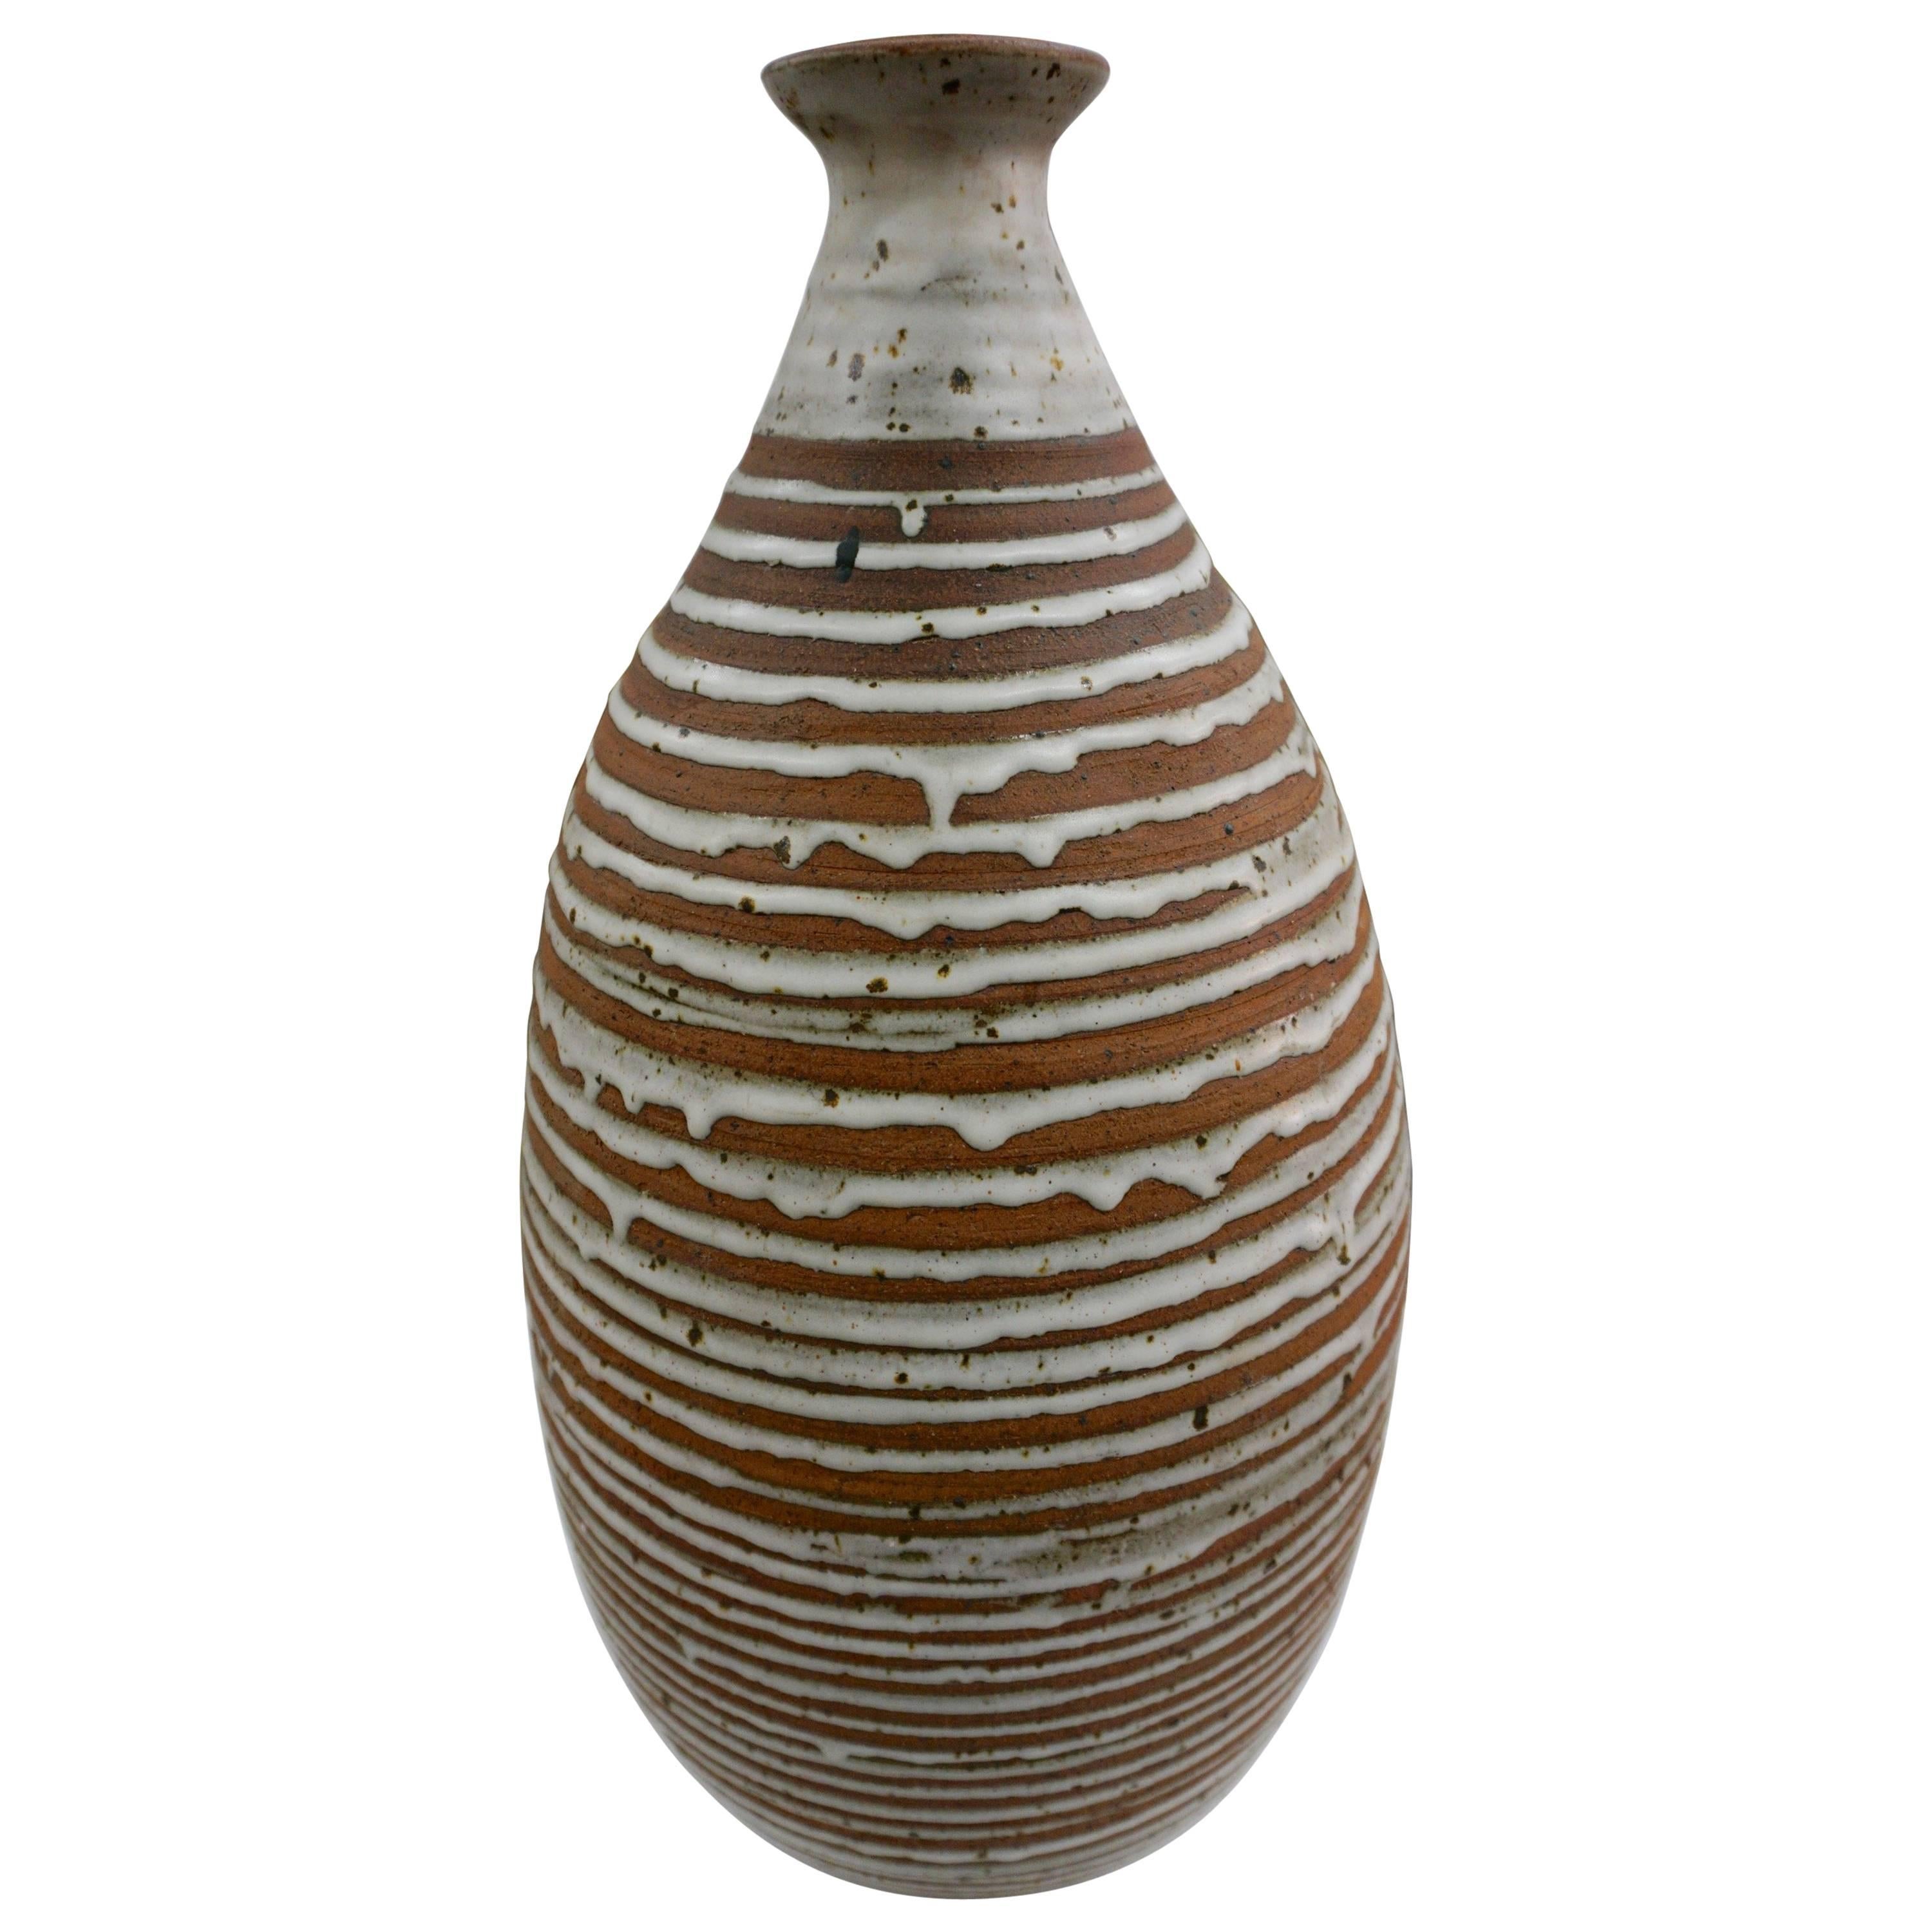 Tall Stoneware Vase with Drip Glaze